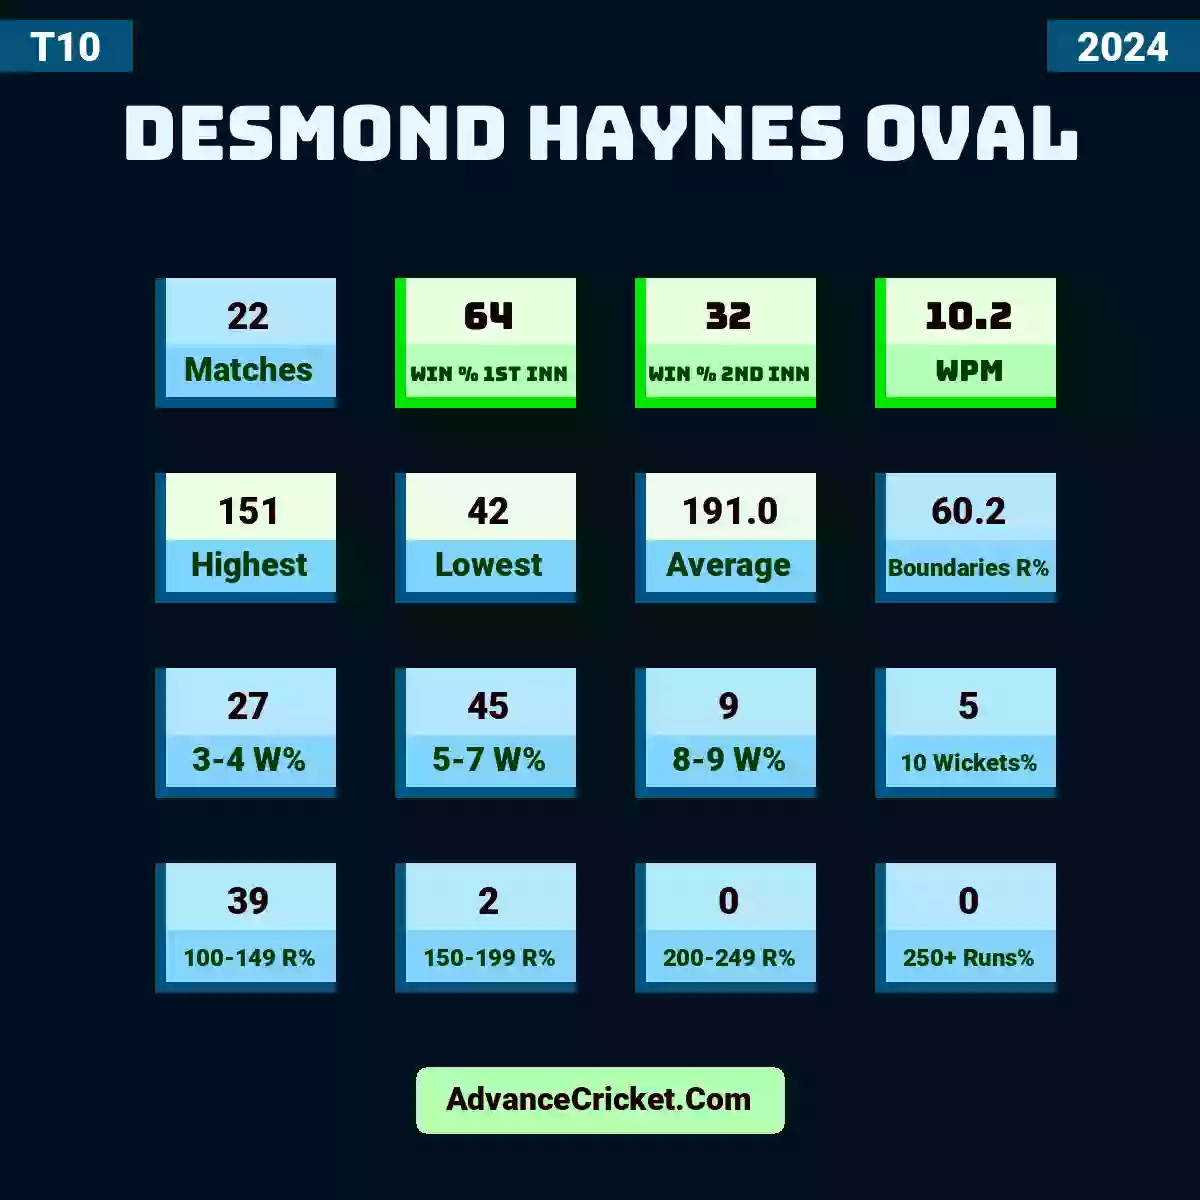 Image showing Desmond Haynes Oval with Matches: 22, Win % 1st Inn: 64, Win % 2nd Inn: 32, WPM: 10.2, Highest: 151, Lowest: 42, Average: 191.0, Boundaries R%: 60.2, 3-4 W%: 27, 5-7 W%: 45, 8-9 W%: 9, 10 Wickets%: 5, 100-149 R%: 39, 150-199 R%: 2, 200-249 R%: 0, 250+ Runs%: 0.